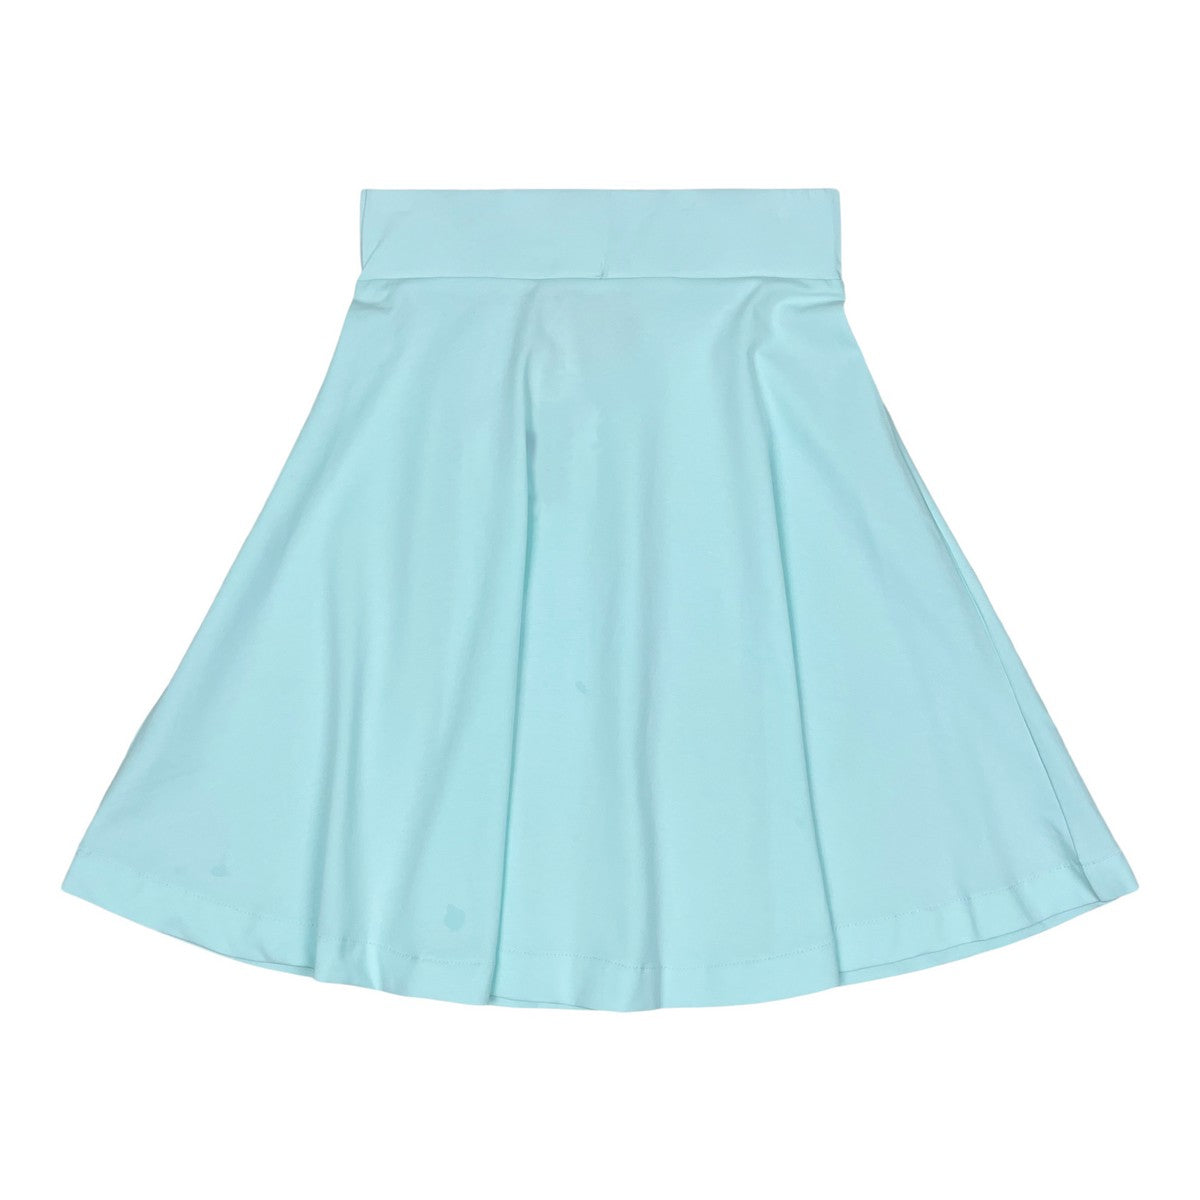 Skylight Puff Skirt